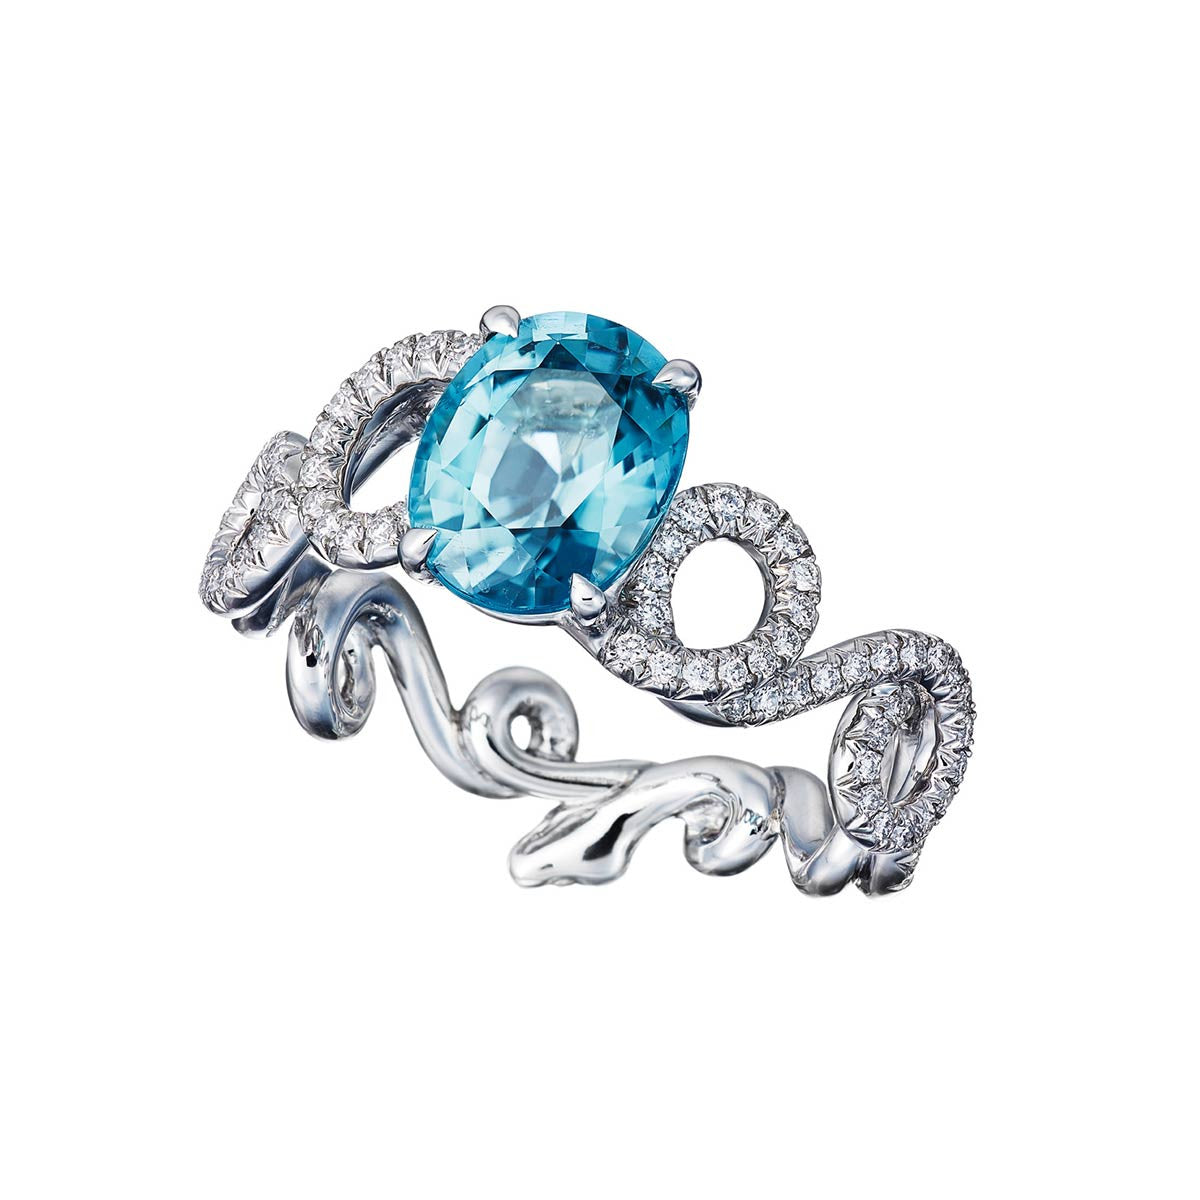 Light Blue Tourmaline Ring with diamonds - Ana Cavalheiro Fine Jewelry